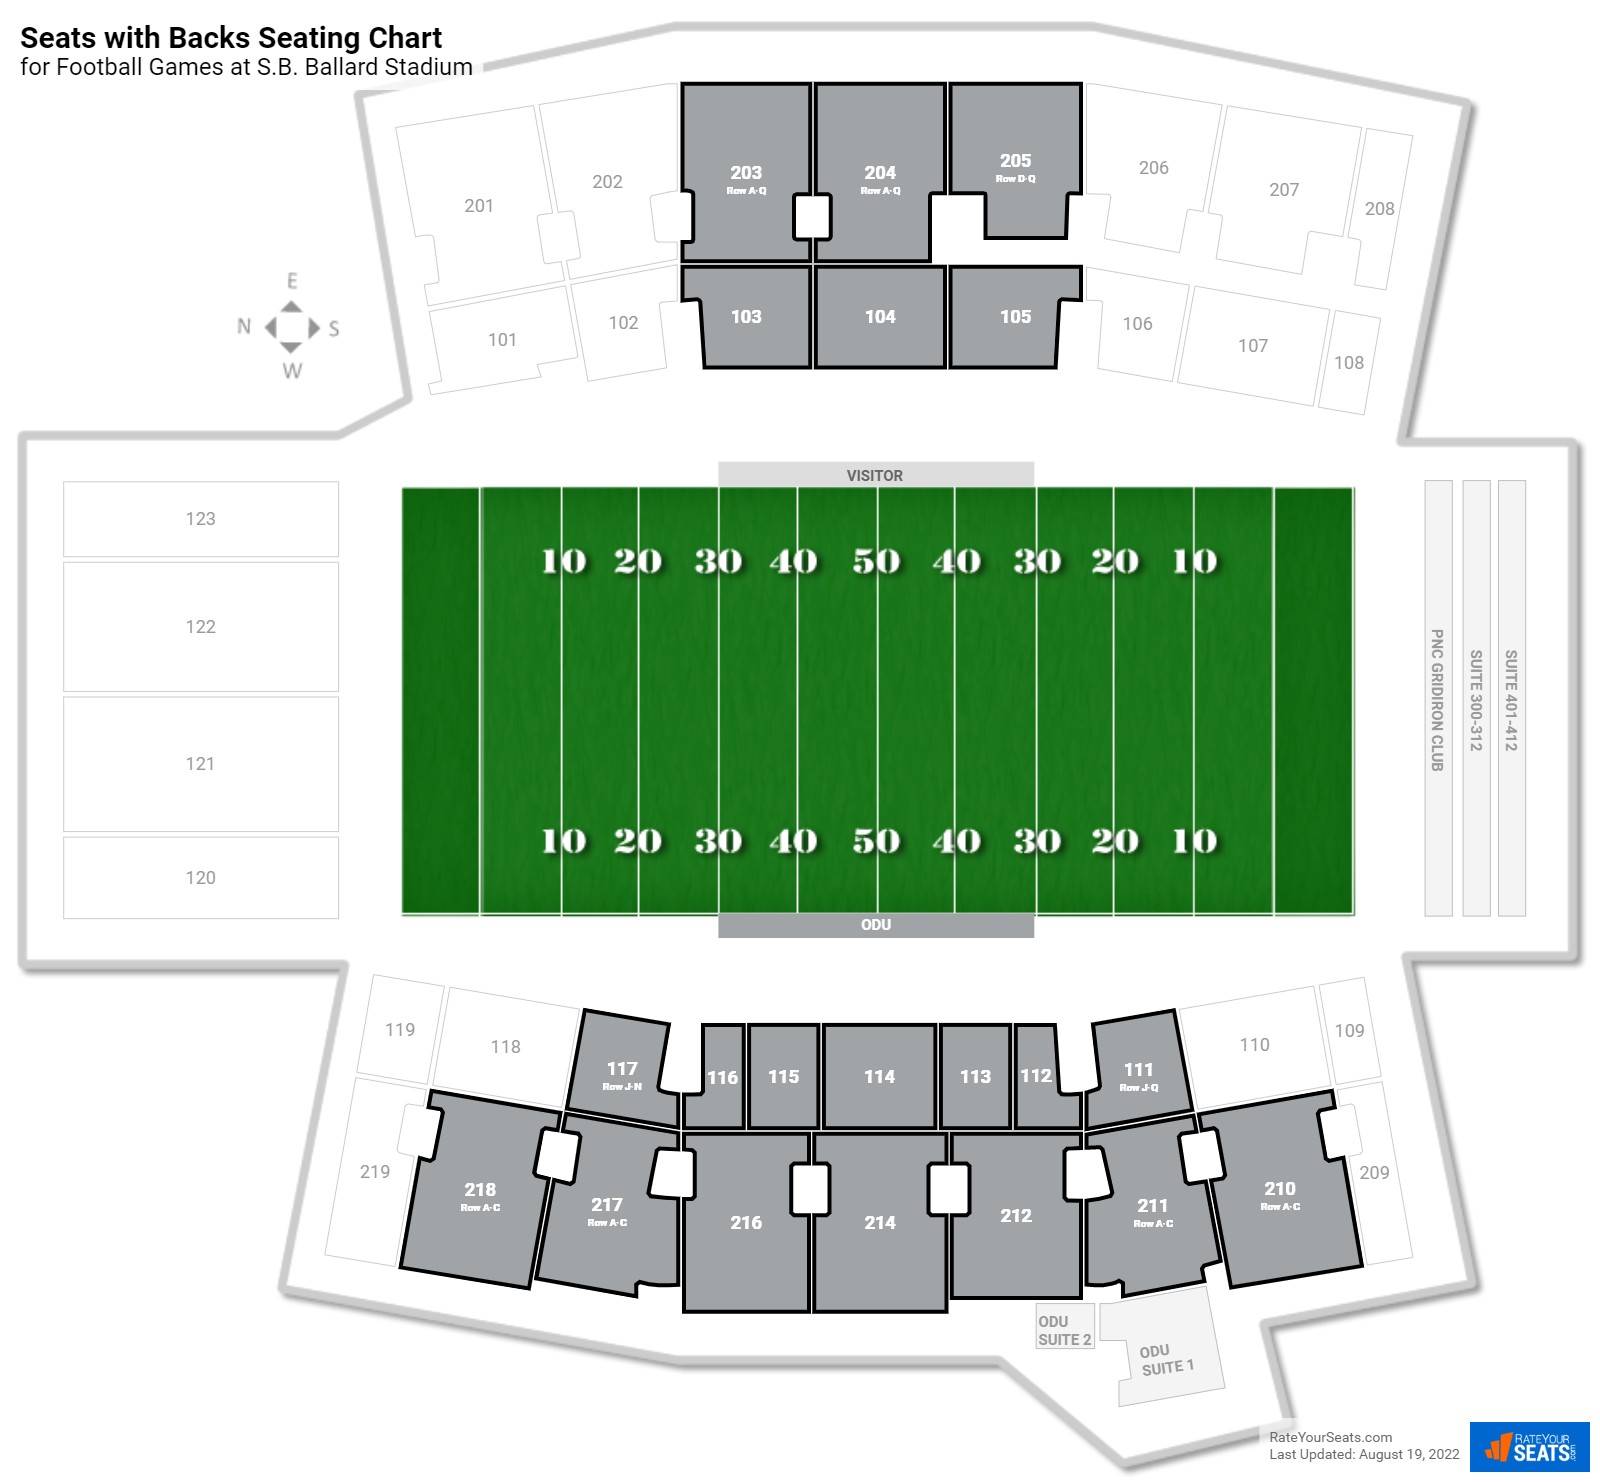 Football Seats with Backs Seating Chart at S.B. Ballard Stadium